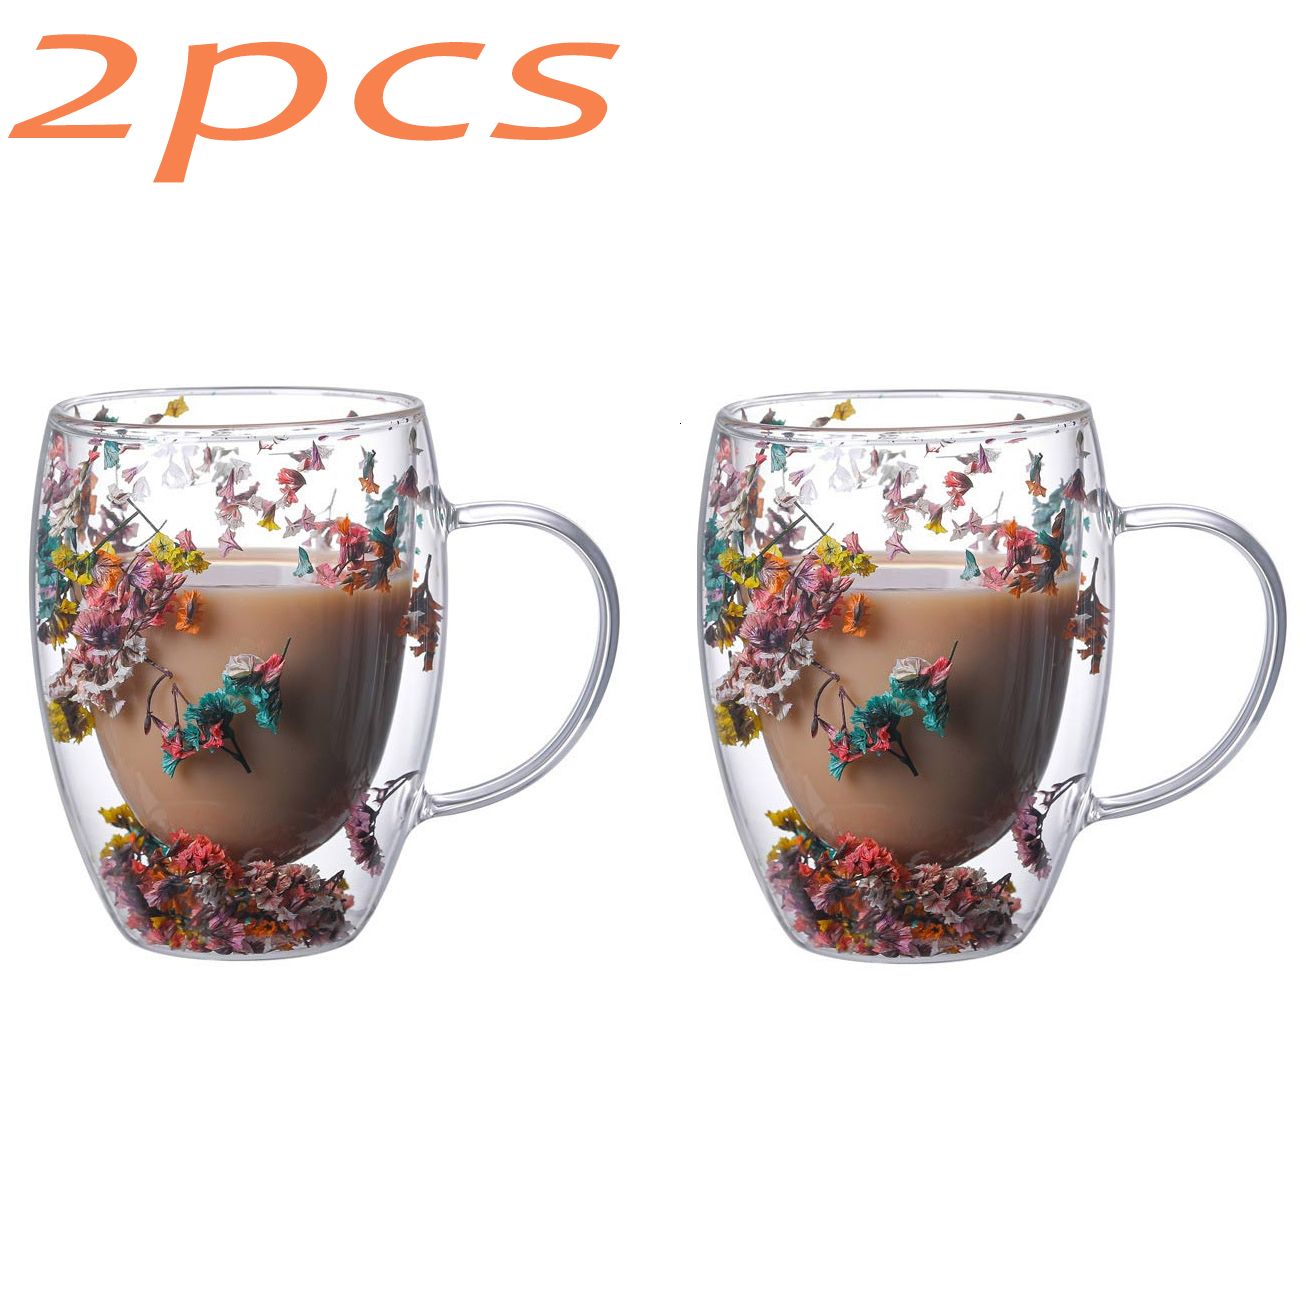 280ml Creative Double Wall Glass Mug Cartoon Teacup Lovely Coffee